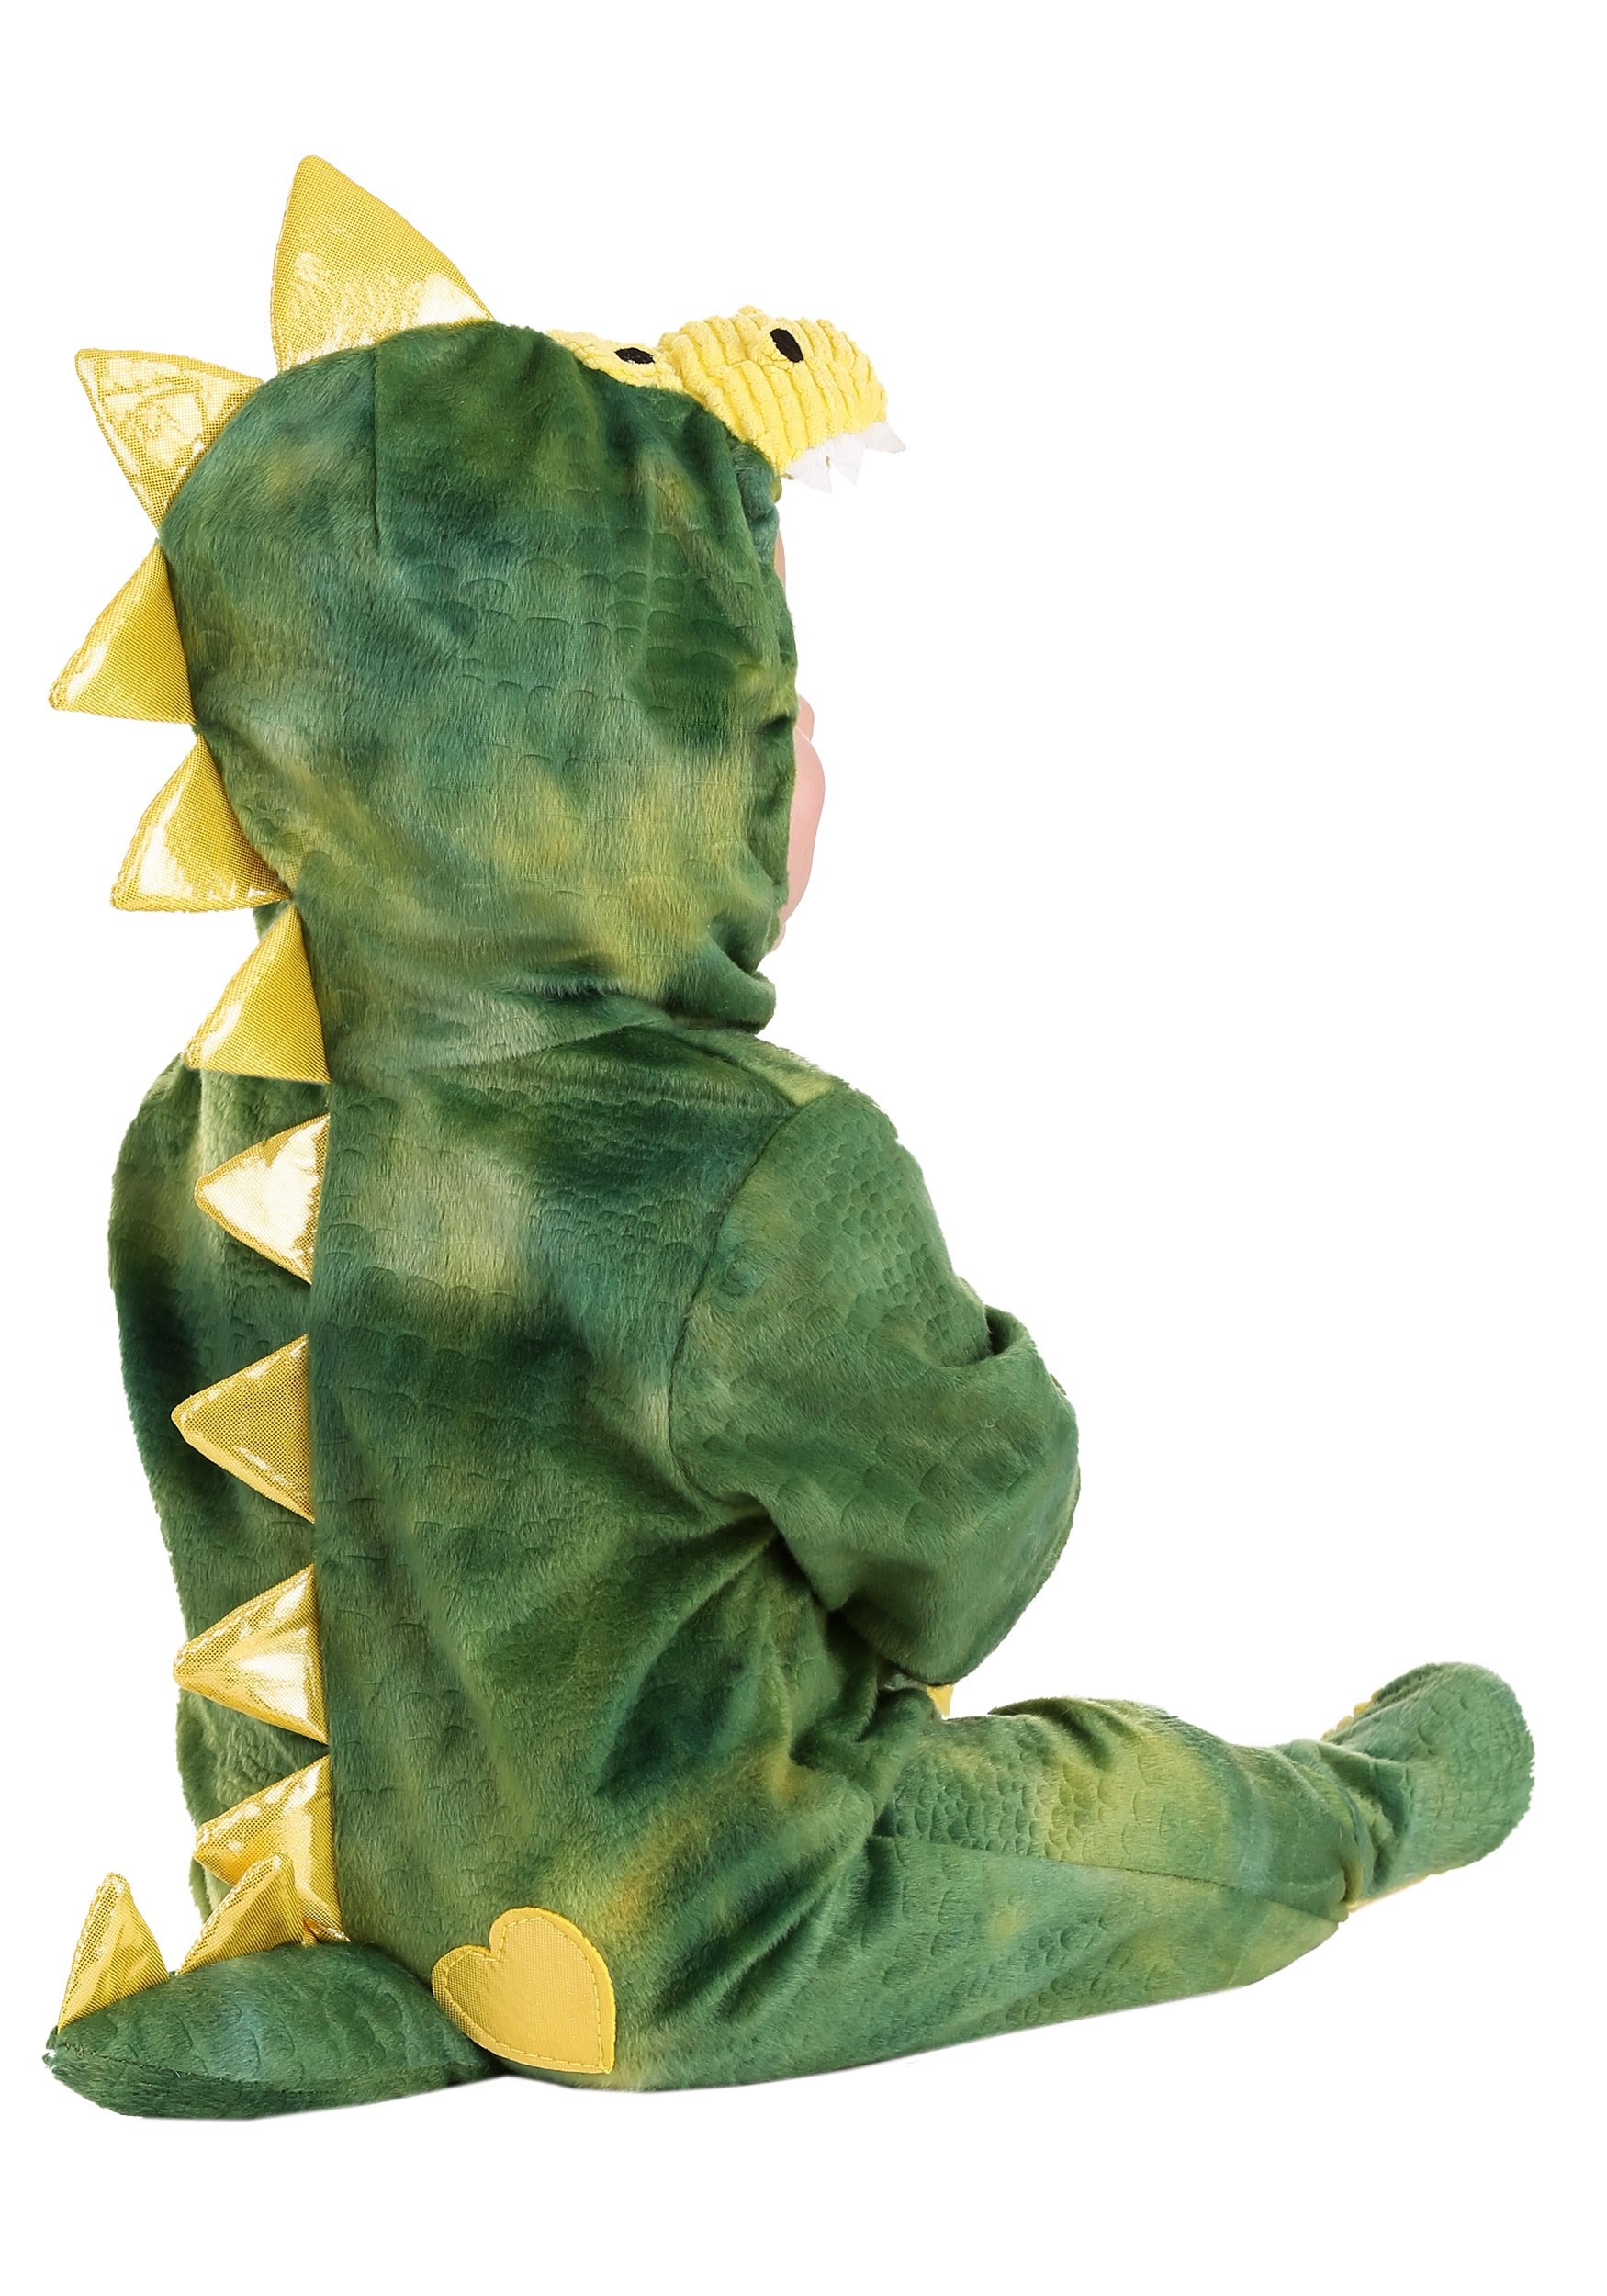 Sleepy Green Dino Infant Costume